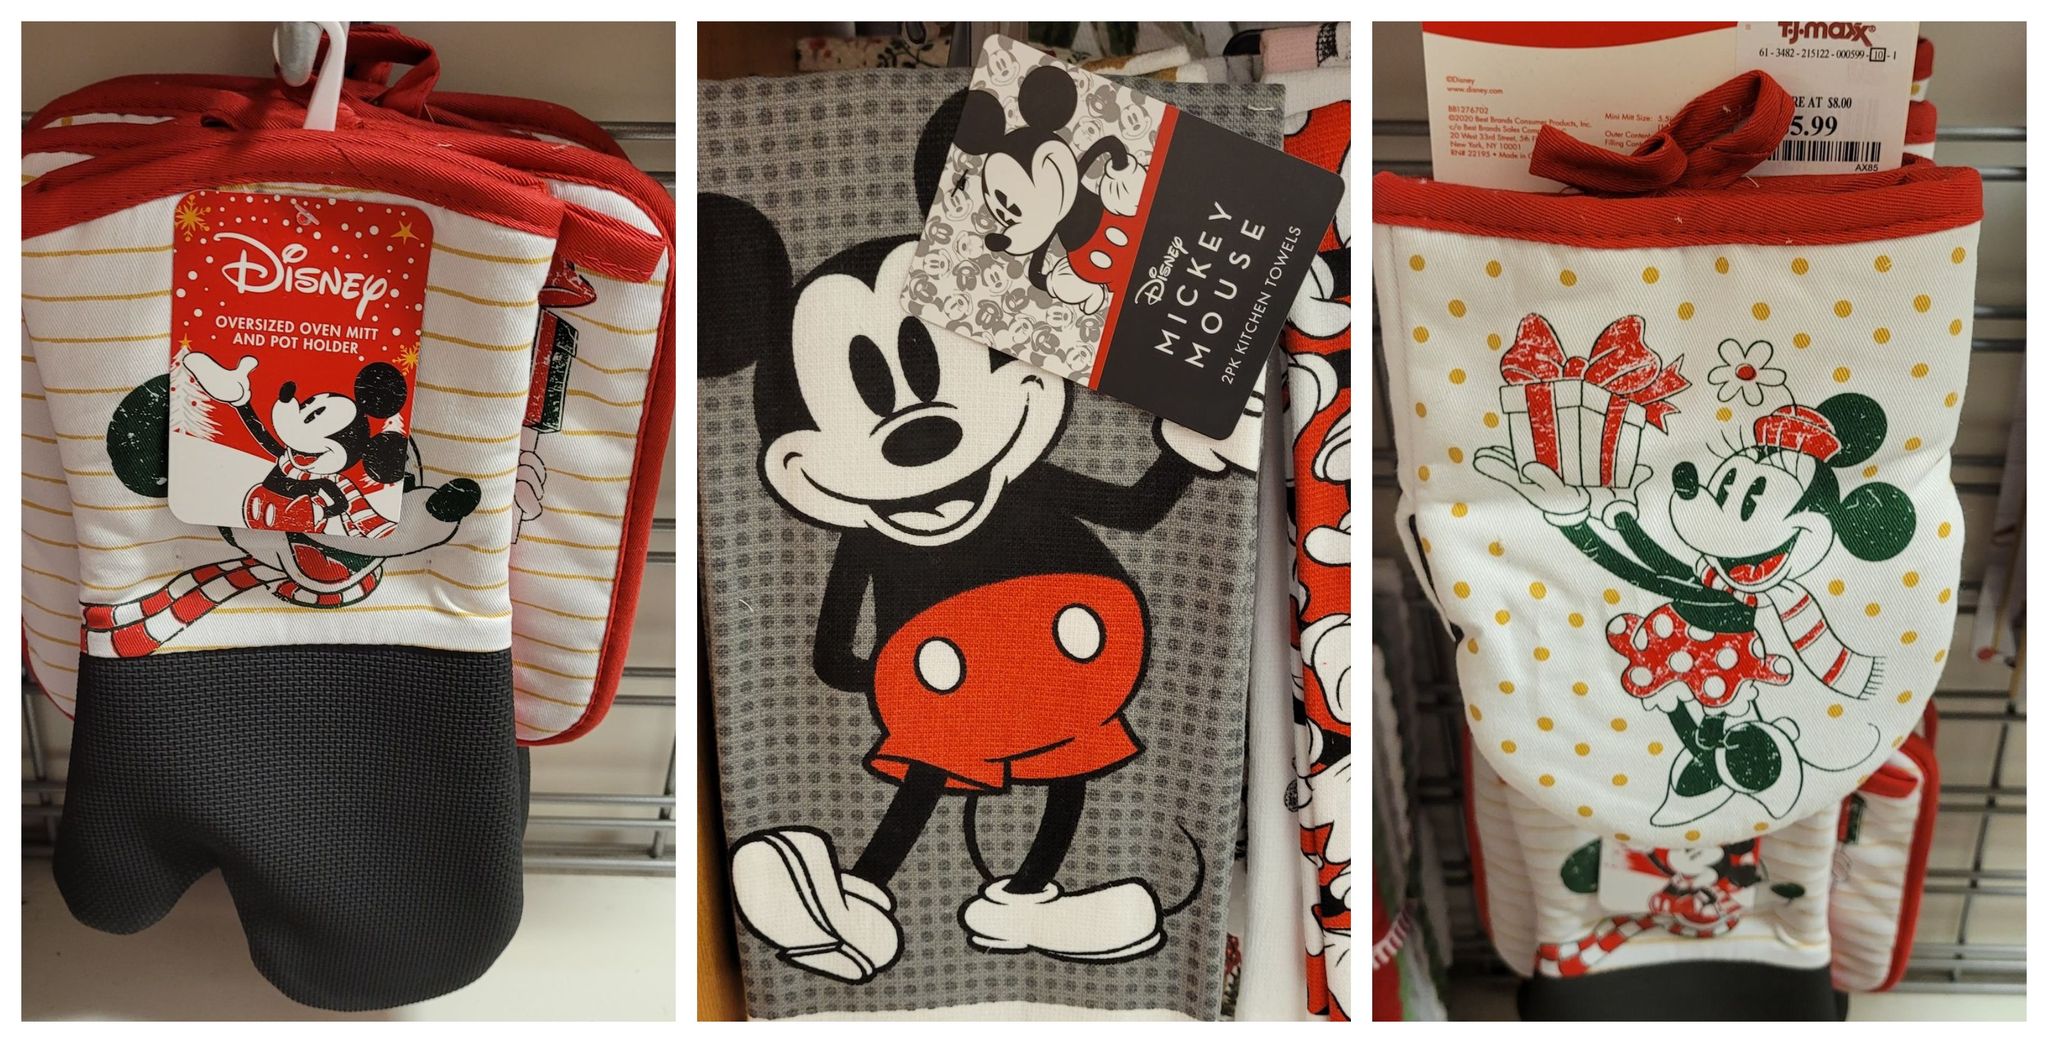 Disney duffel Bags at tjmaxx 😍😍😍😍 #Disney #disneylovers